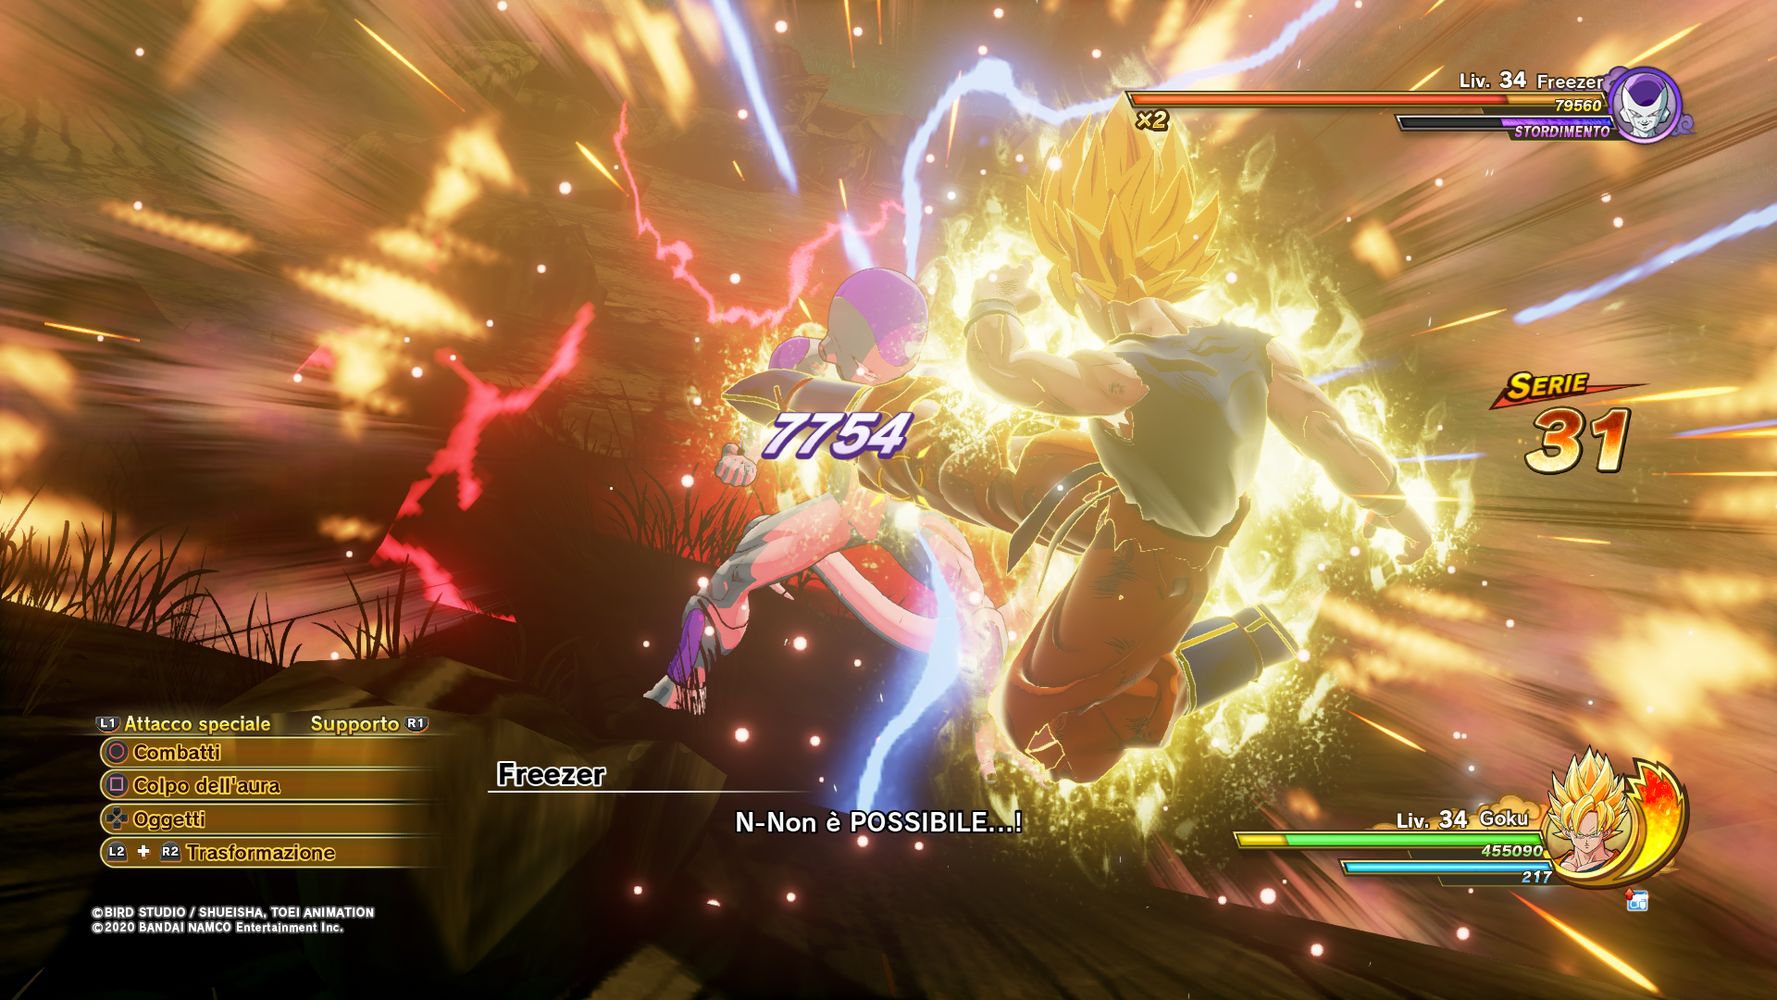 Super Saiyan Goku vs Freezer - DRAGON BALL Z: KAKAROT